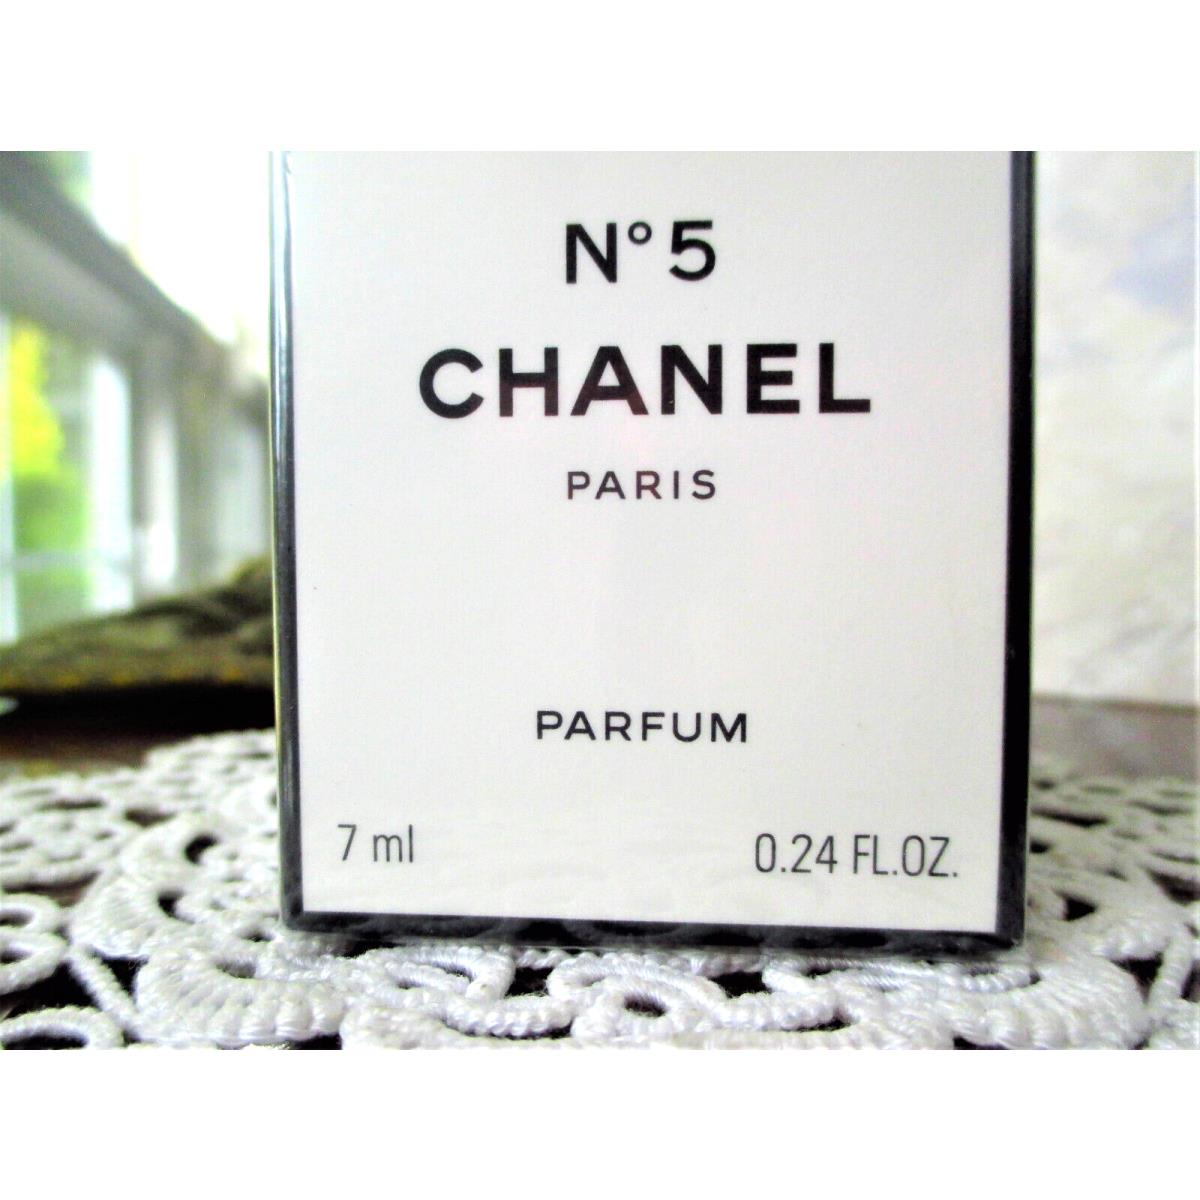 Chanel perfume,cologne,fragrance,parfum 